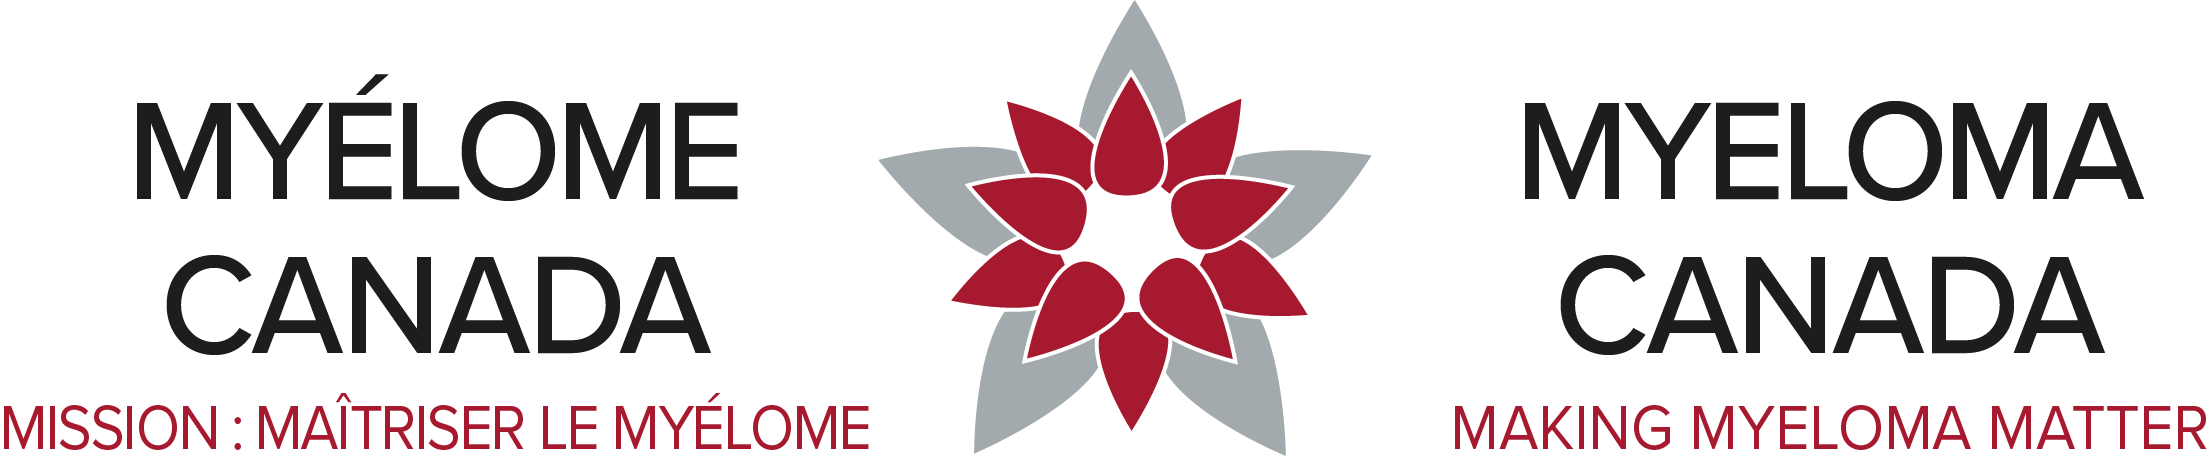 Myeloma Canada Research Grants logo